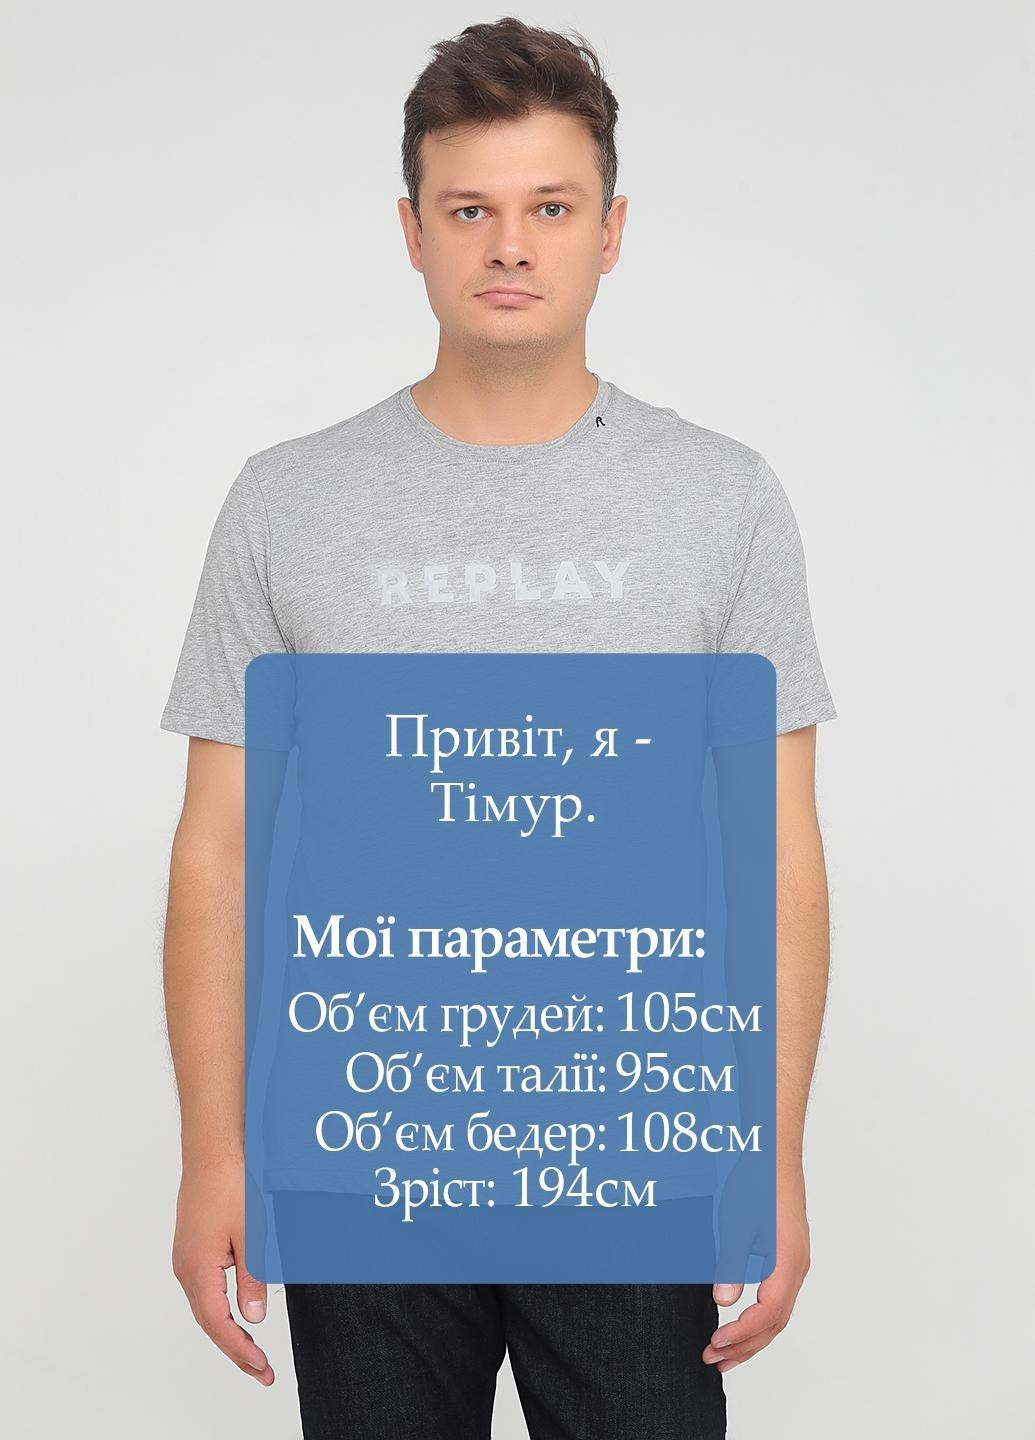 Сіра футболка Replay